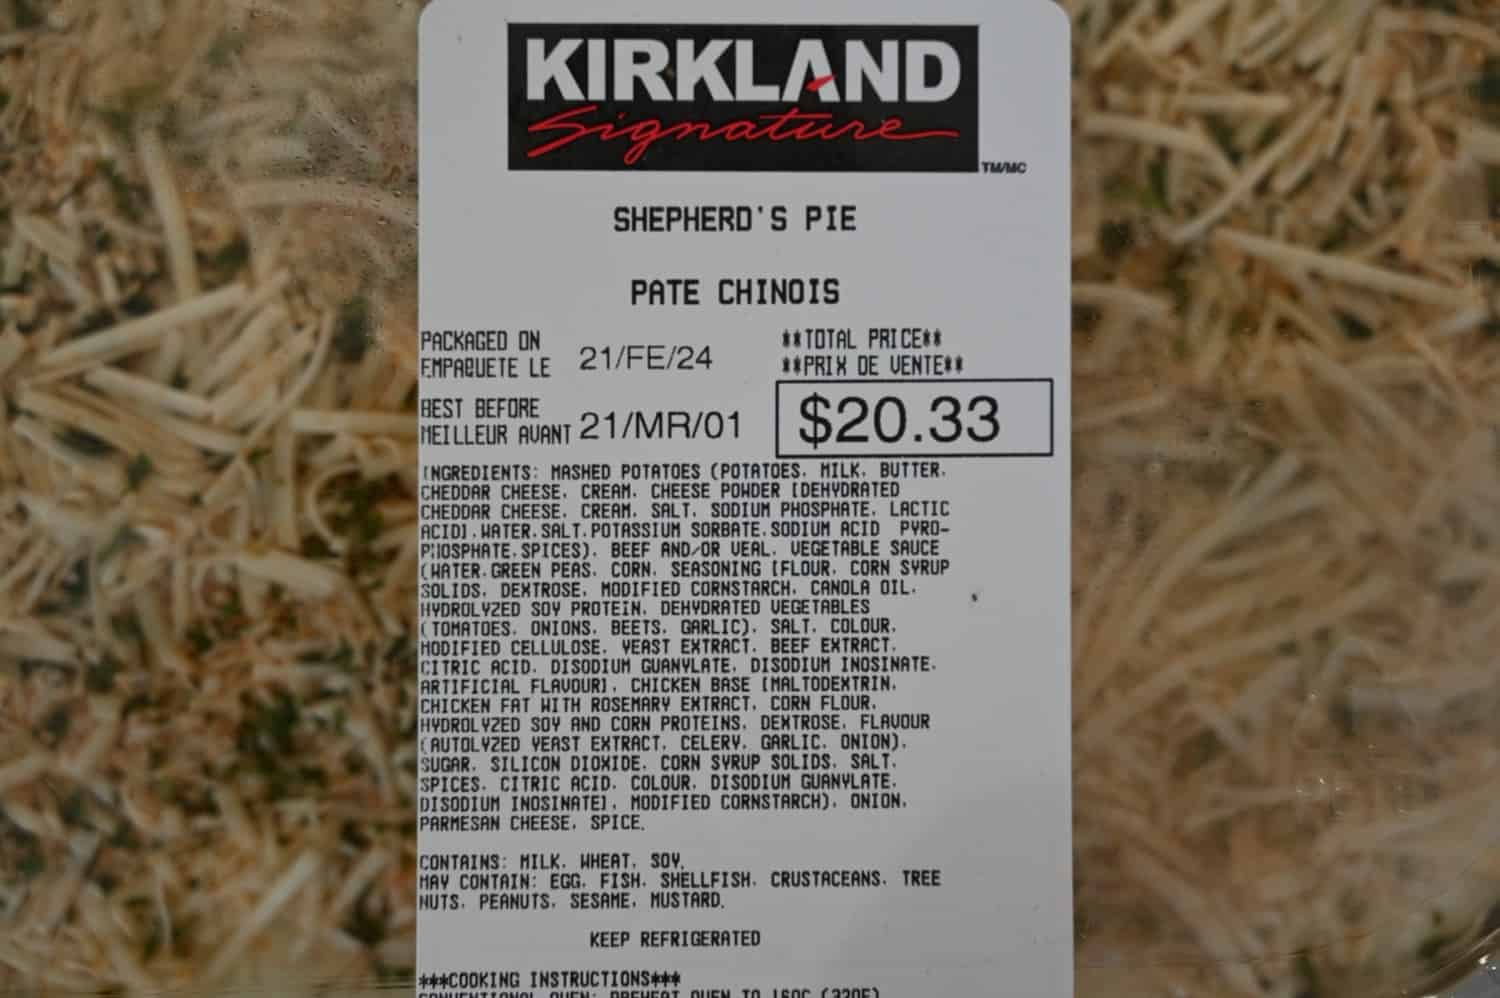 The ingredients list for the Kirkland Signature Shepherd's Pie.